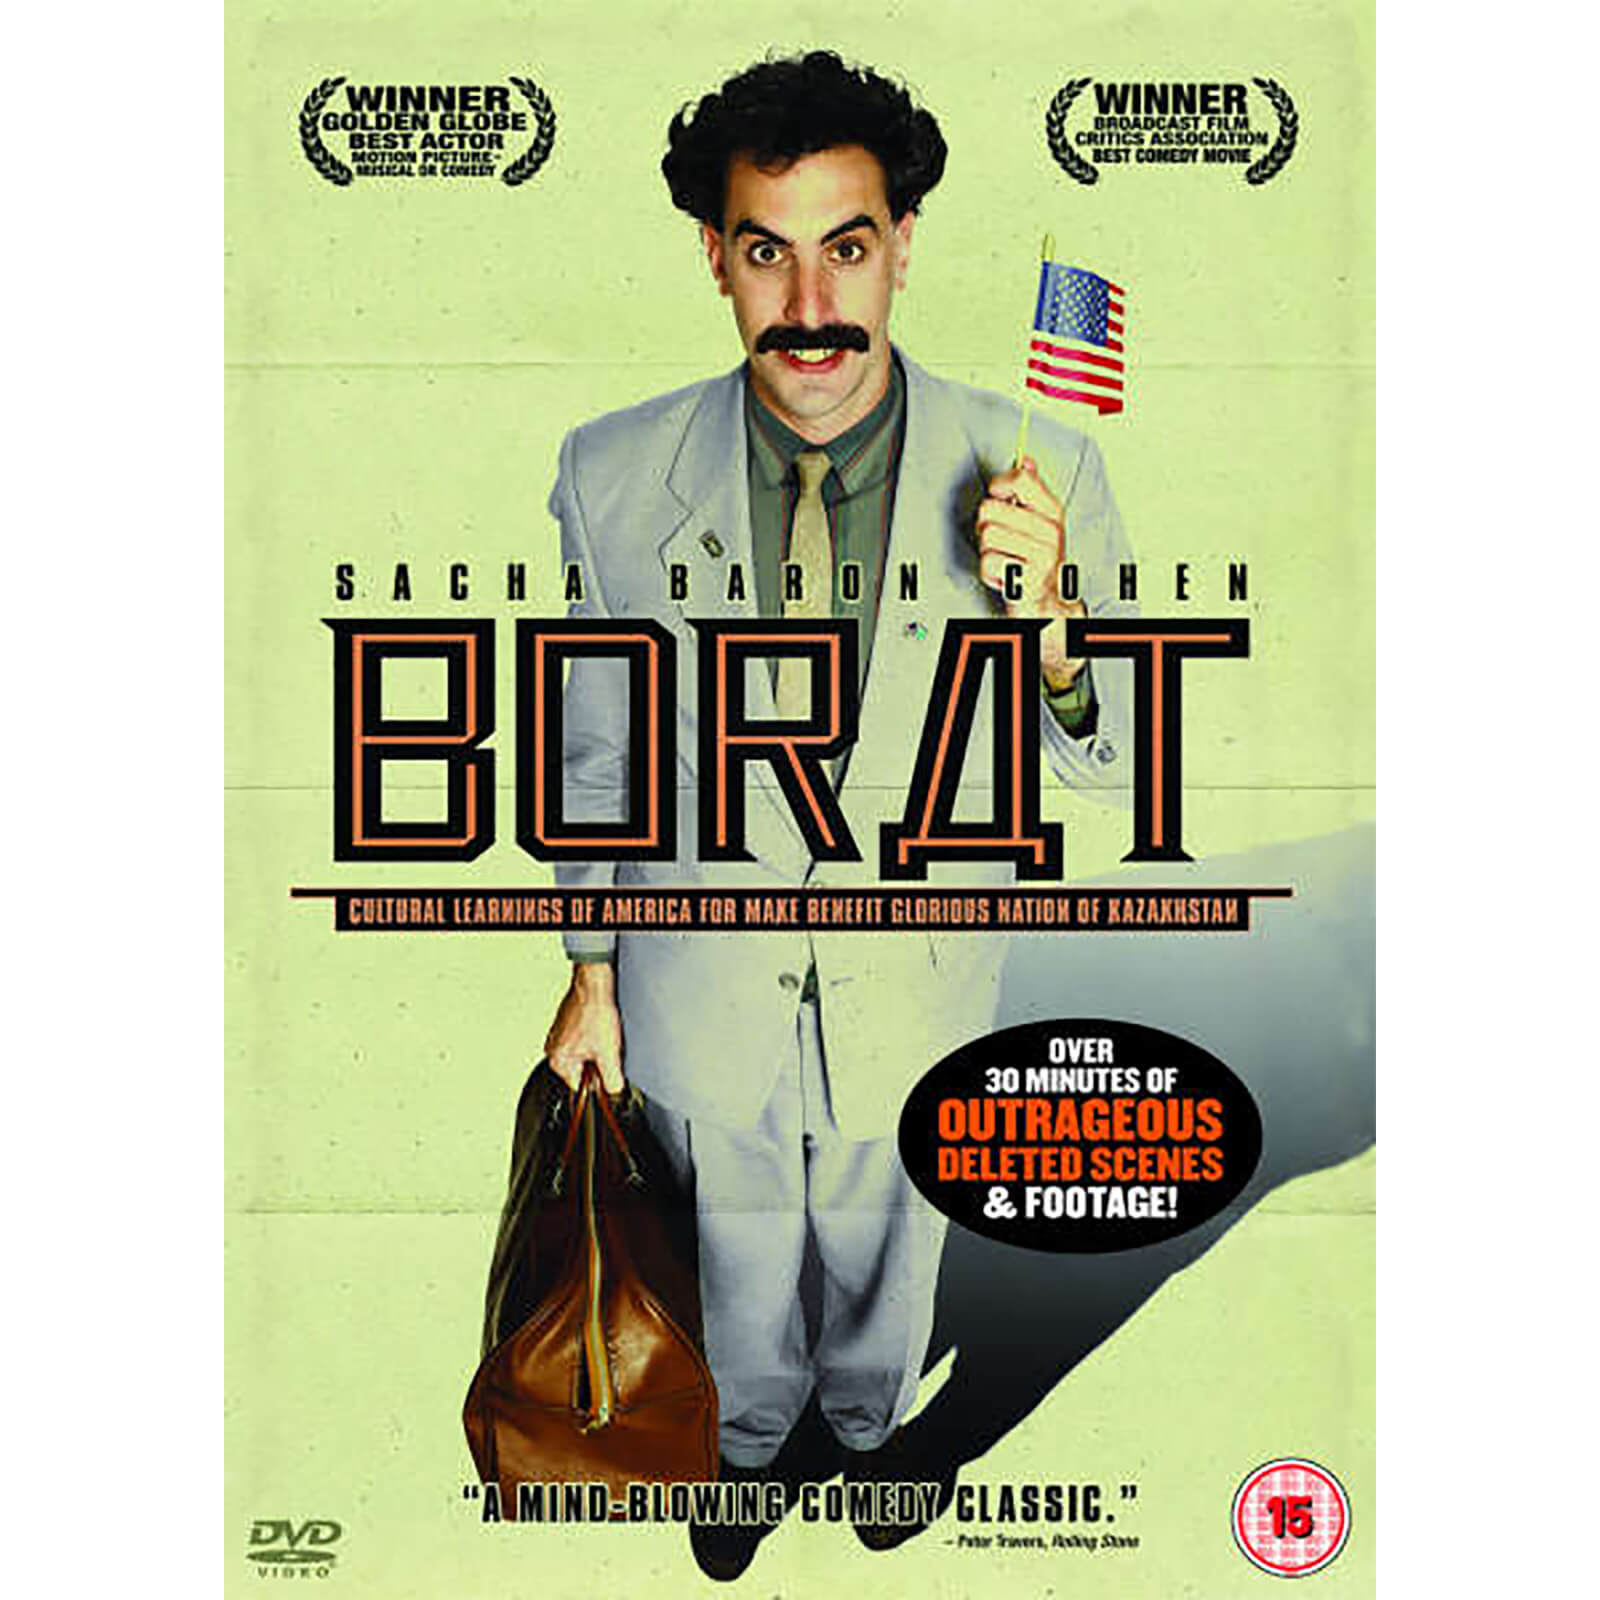 Borat von 20th Century Fox